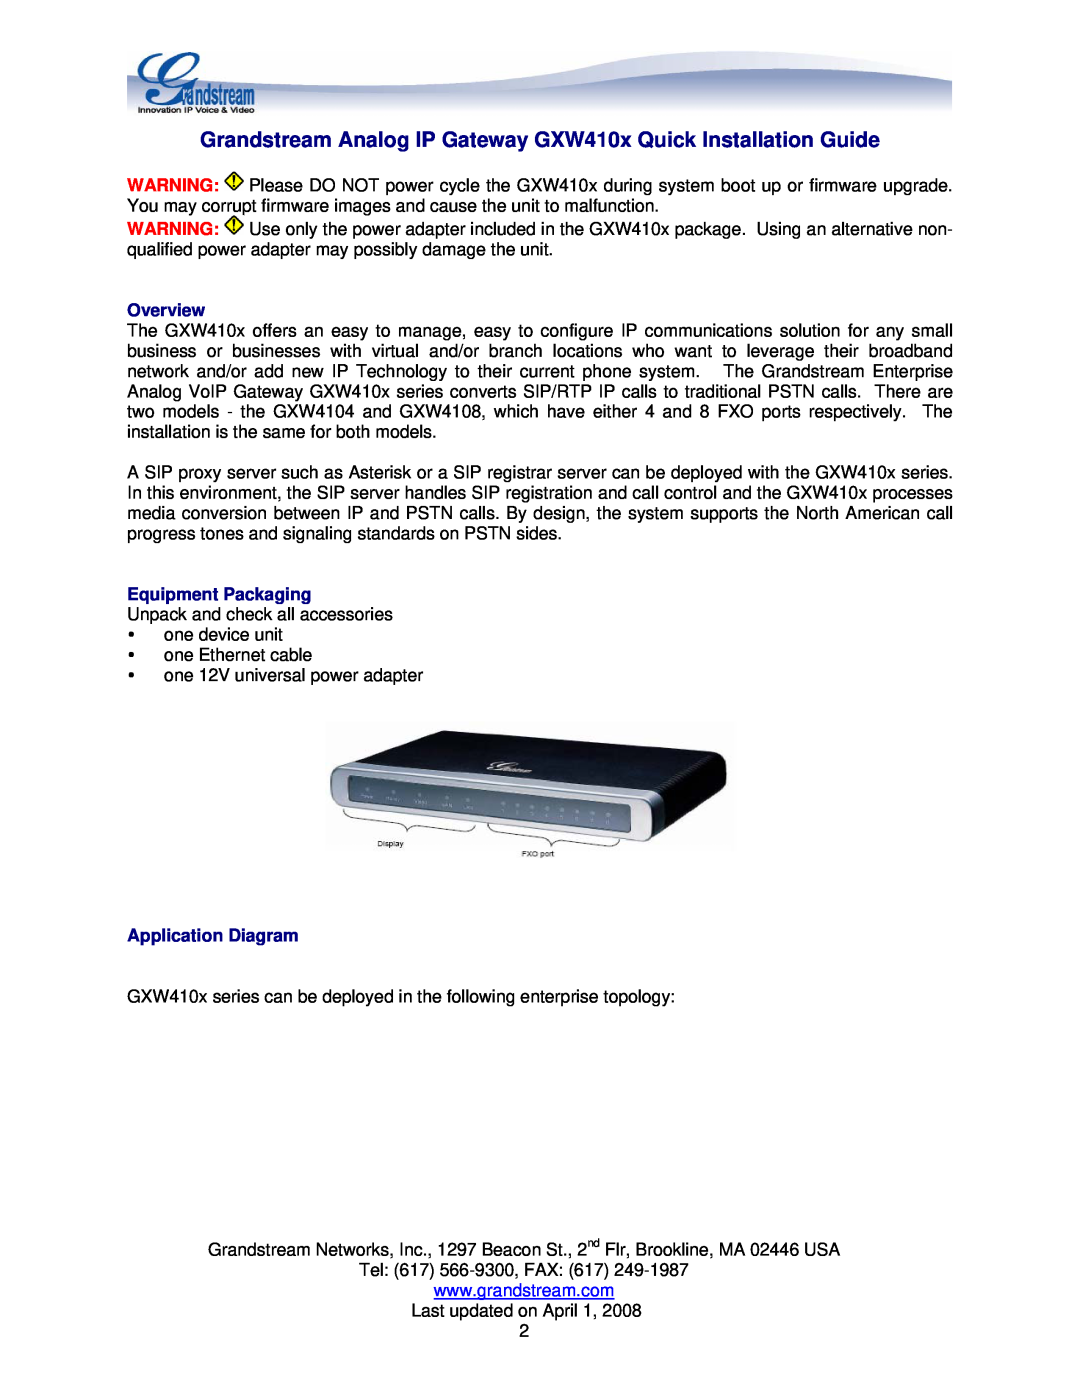 Grandstream Networks GXW410X Grandstream Analog IP Gateway GXW410x Quick Installation Guide, Overview, Equipment Packaging 